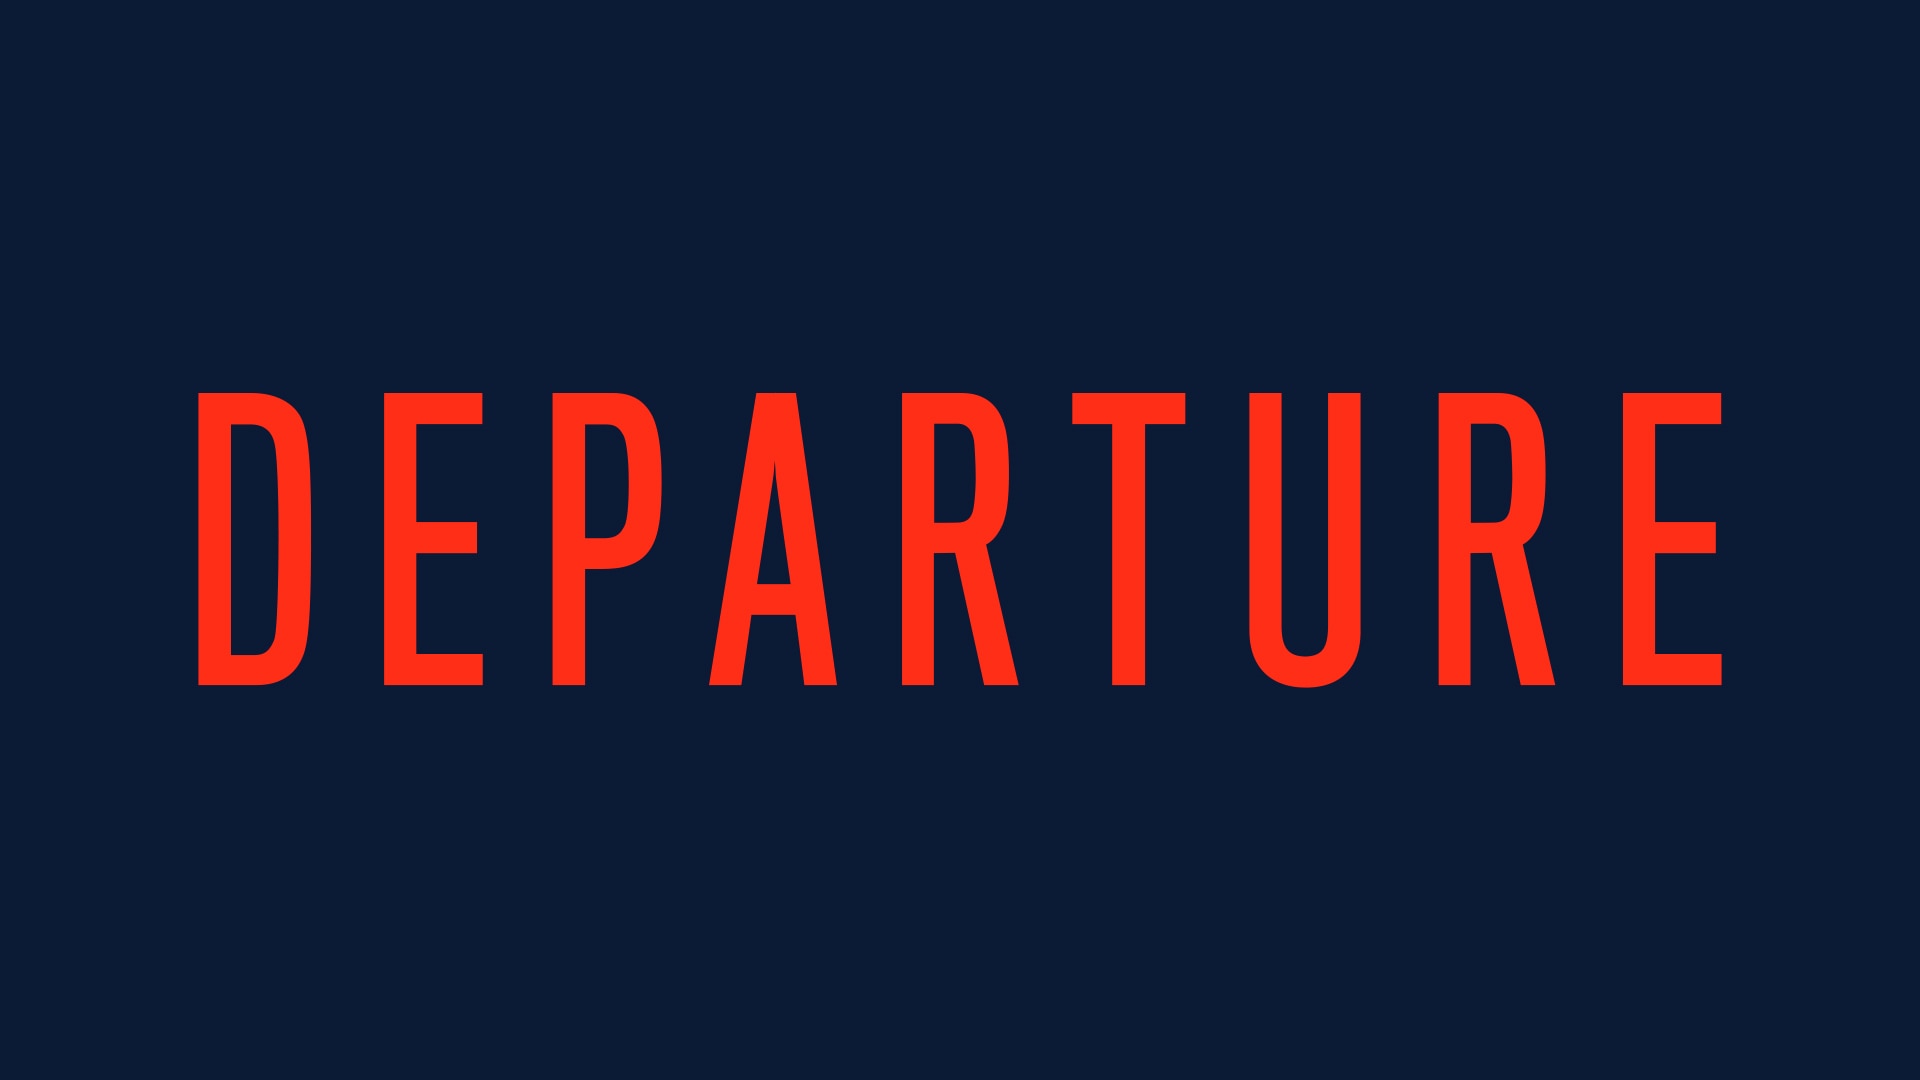 Departure - NBC.com